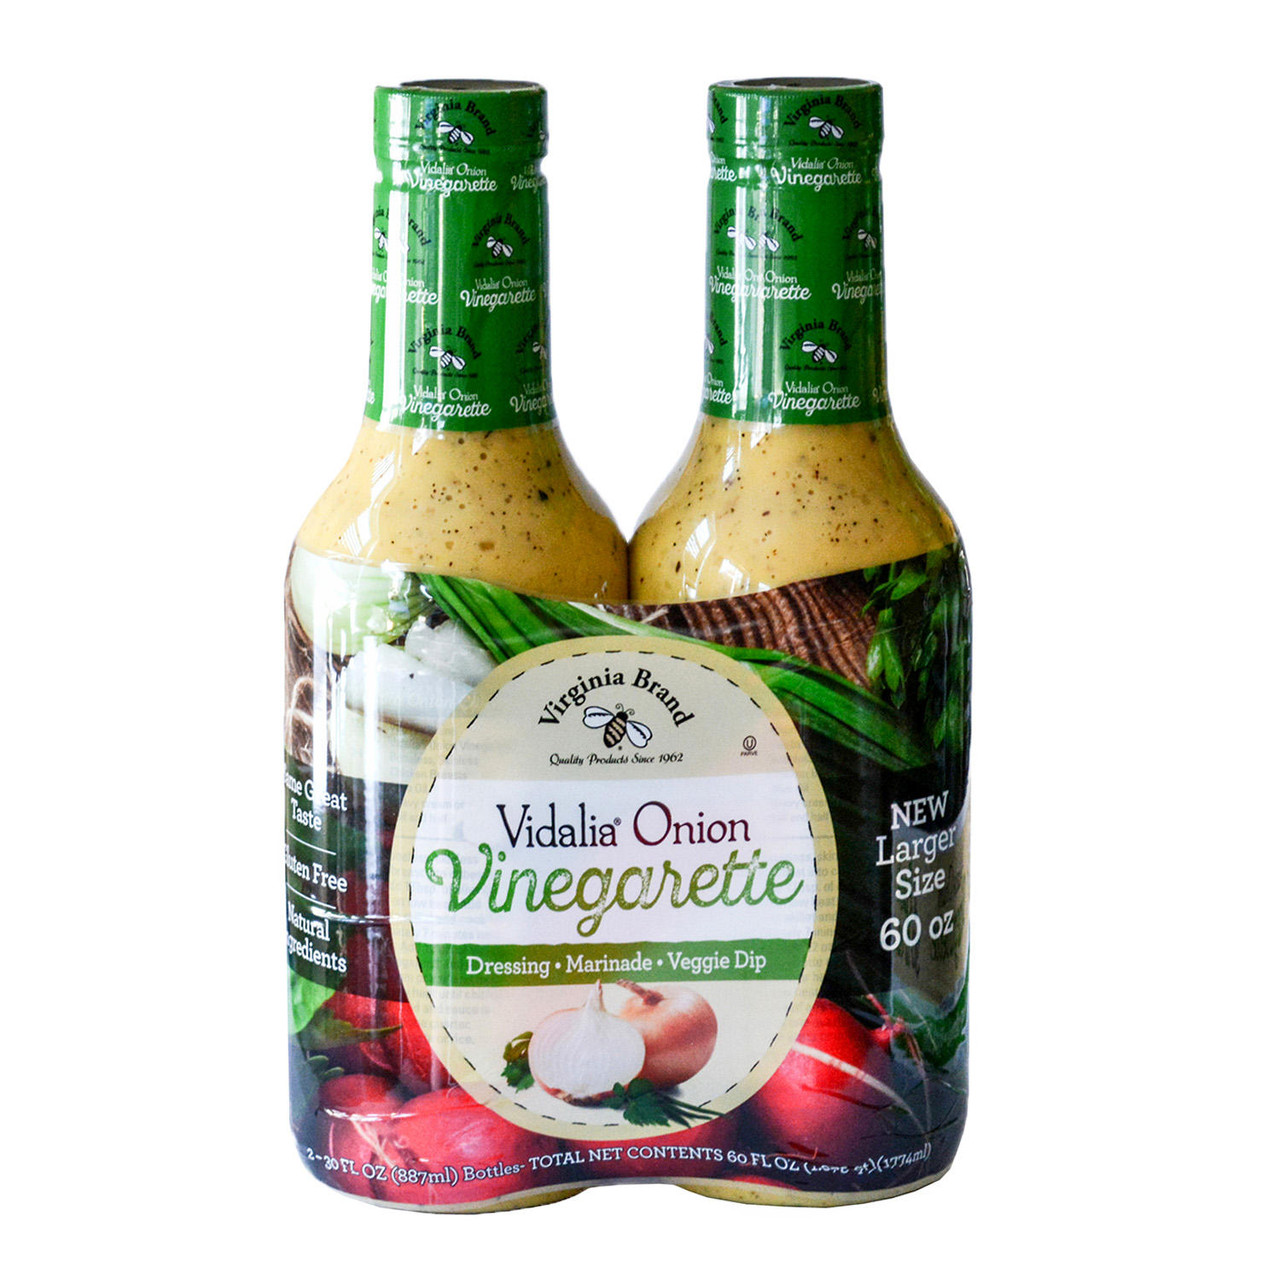 Virginia Brand Vidalia Onion Vinegarette (30 oz., 2 pk.) - [From 36.00 - Choose pk Qty ] - *Ships from Miami